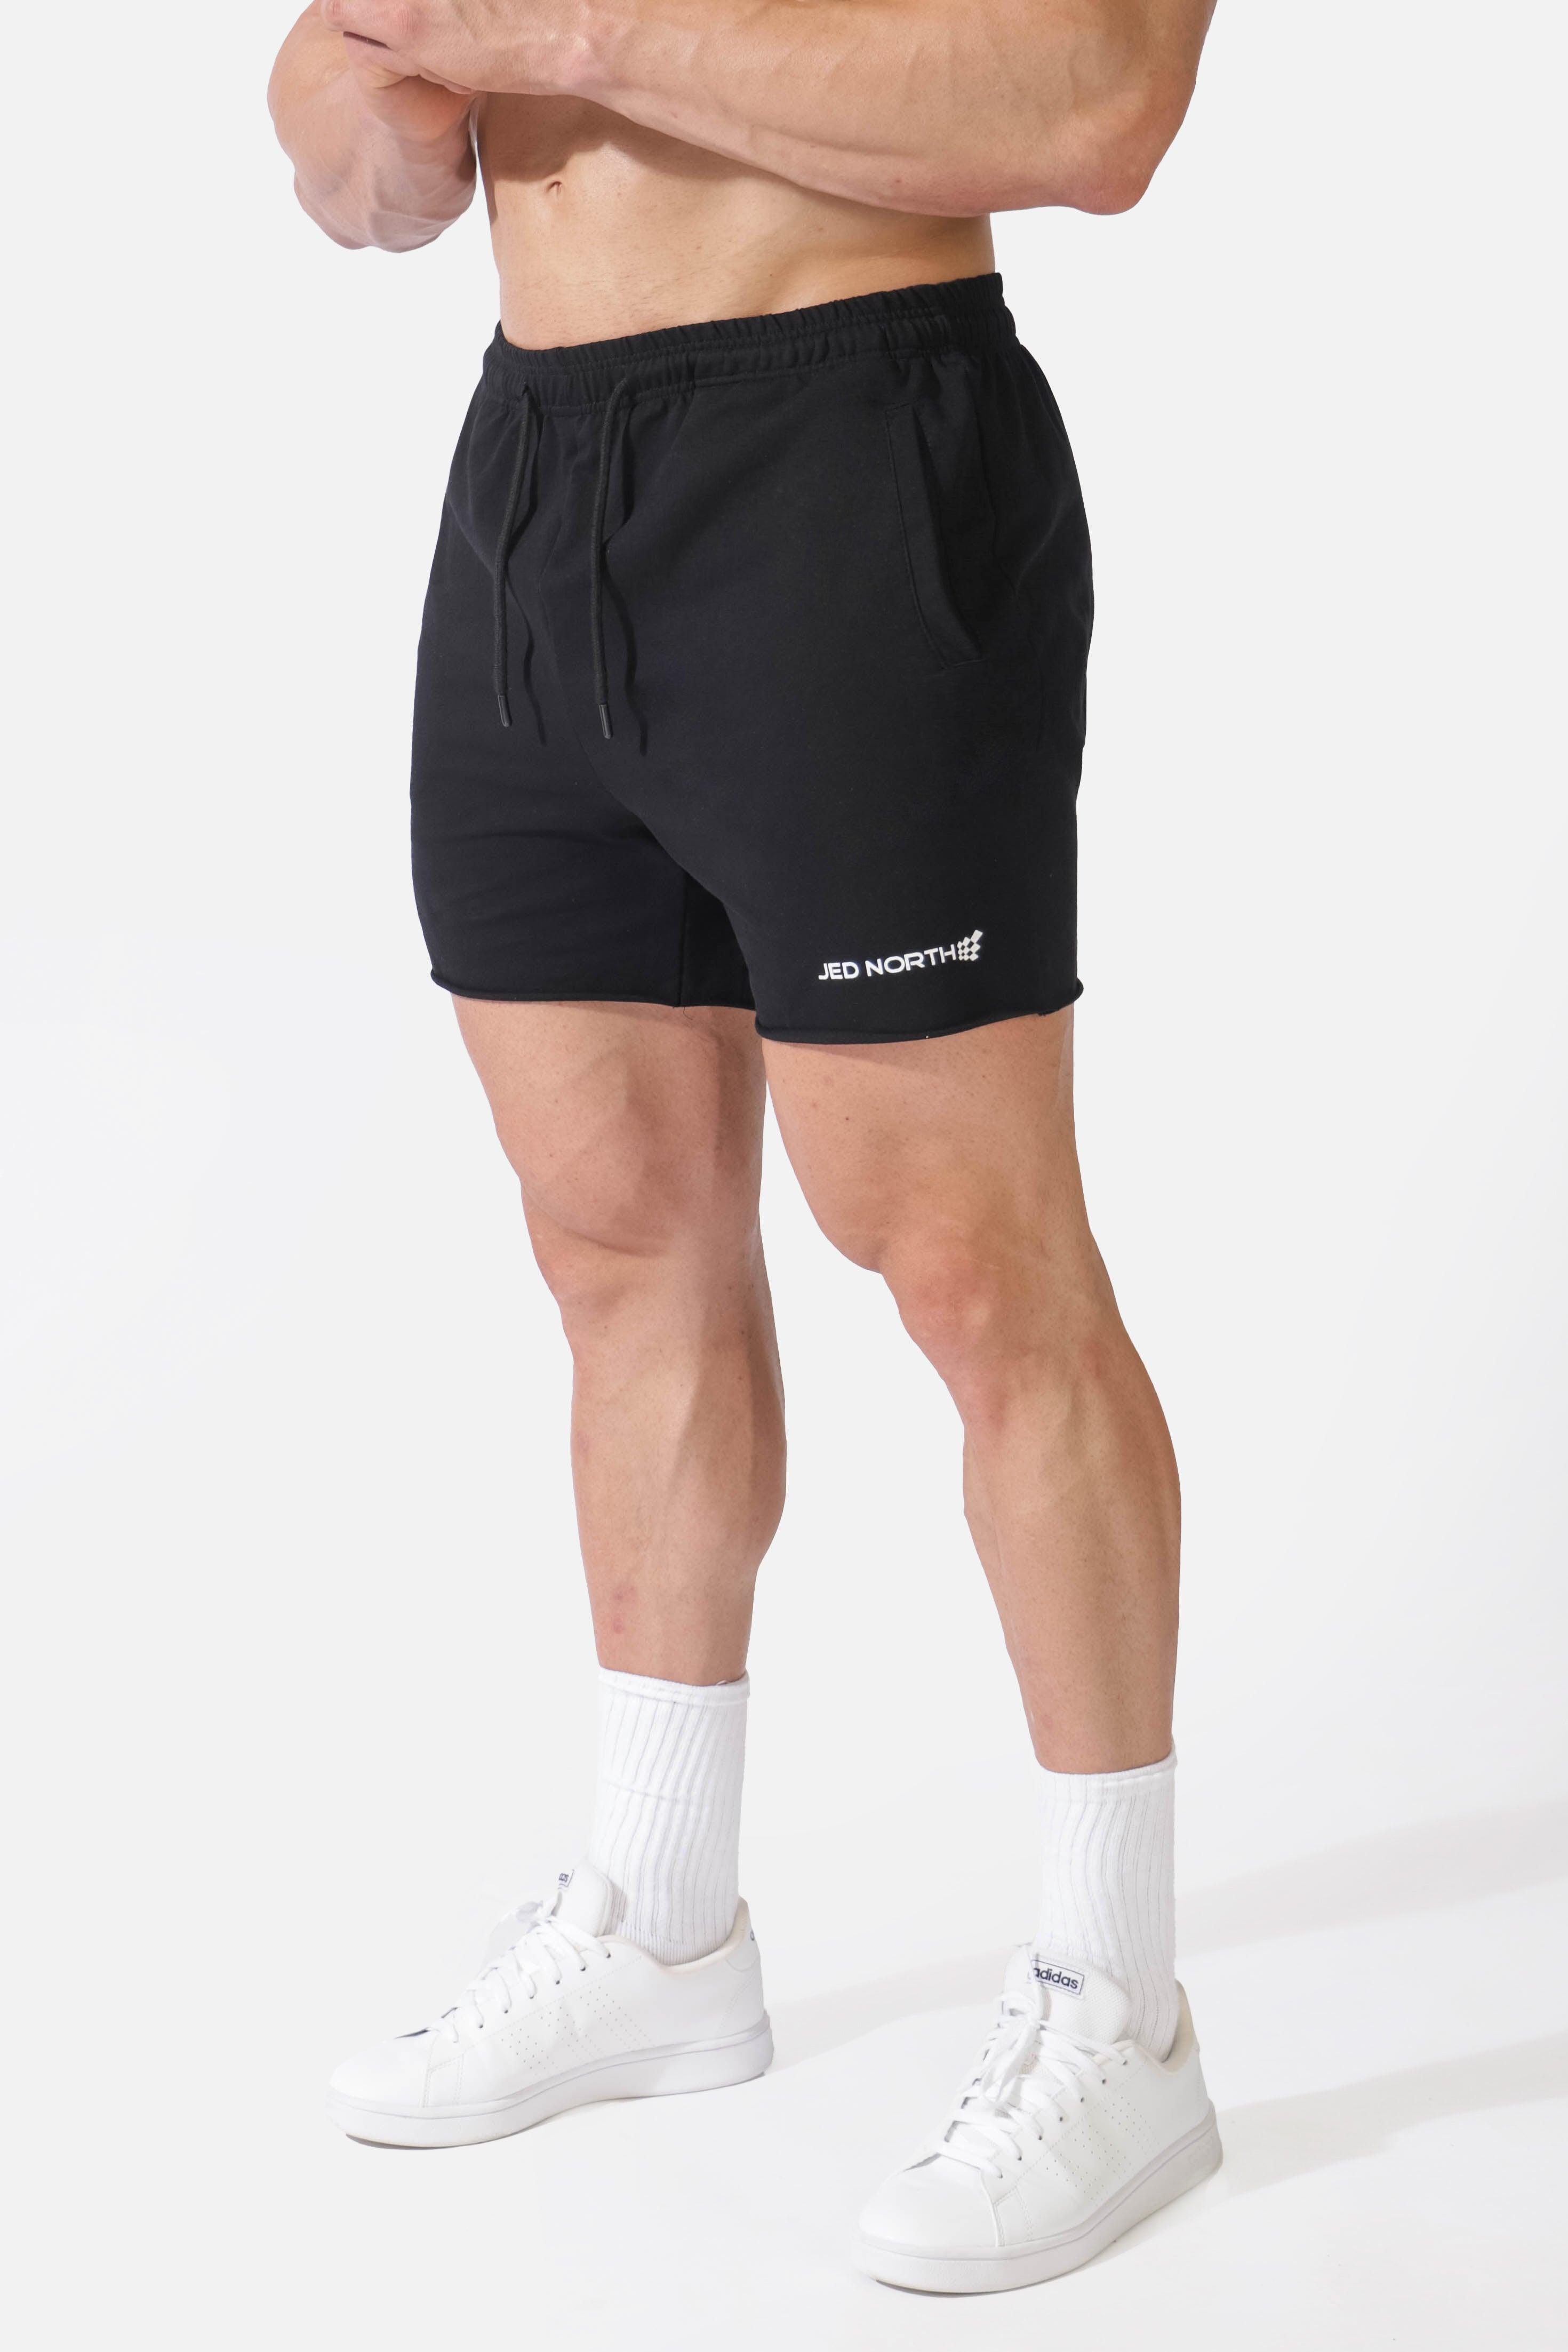 Legend Athletic Workout  Shorts - Black - Jed North